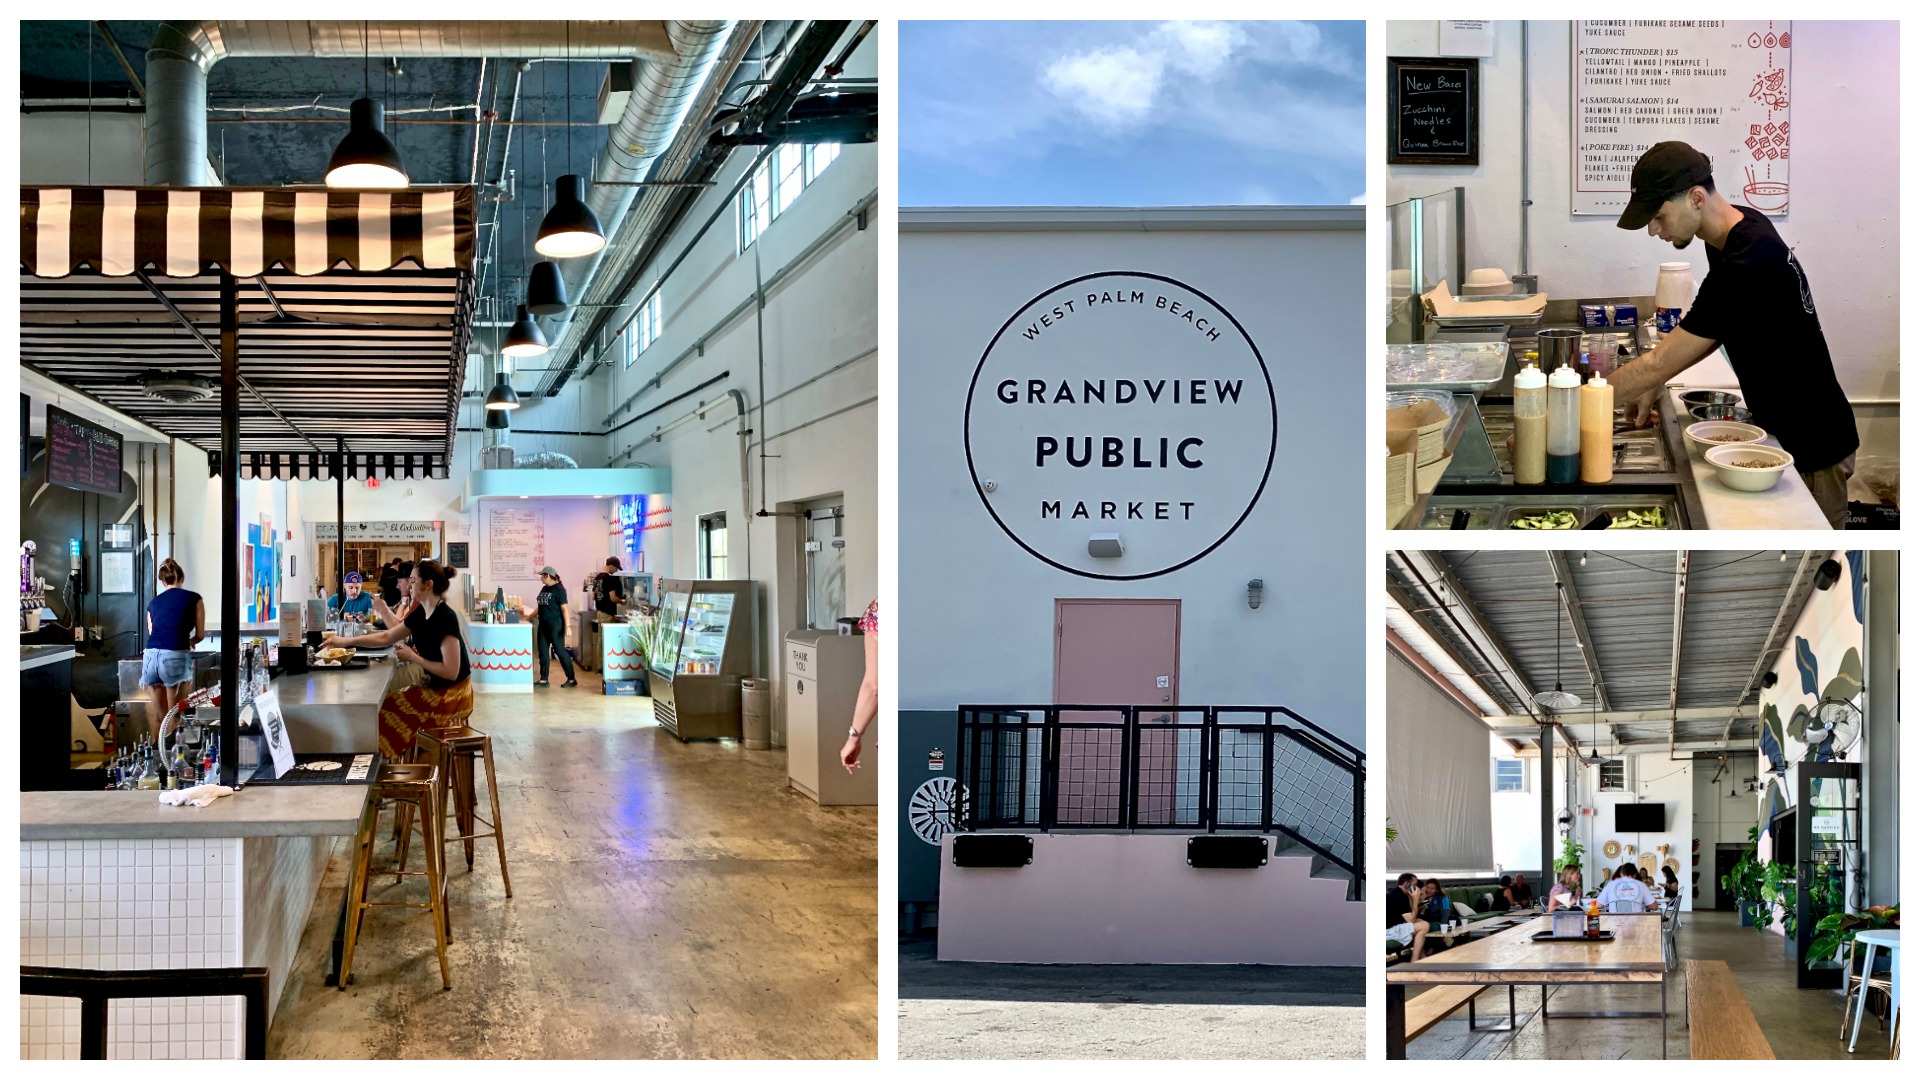 grandview public market